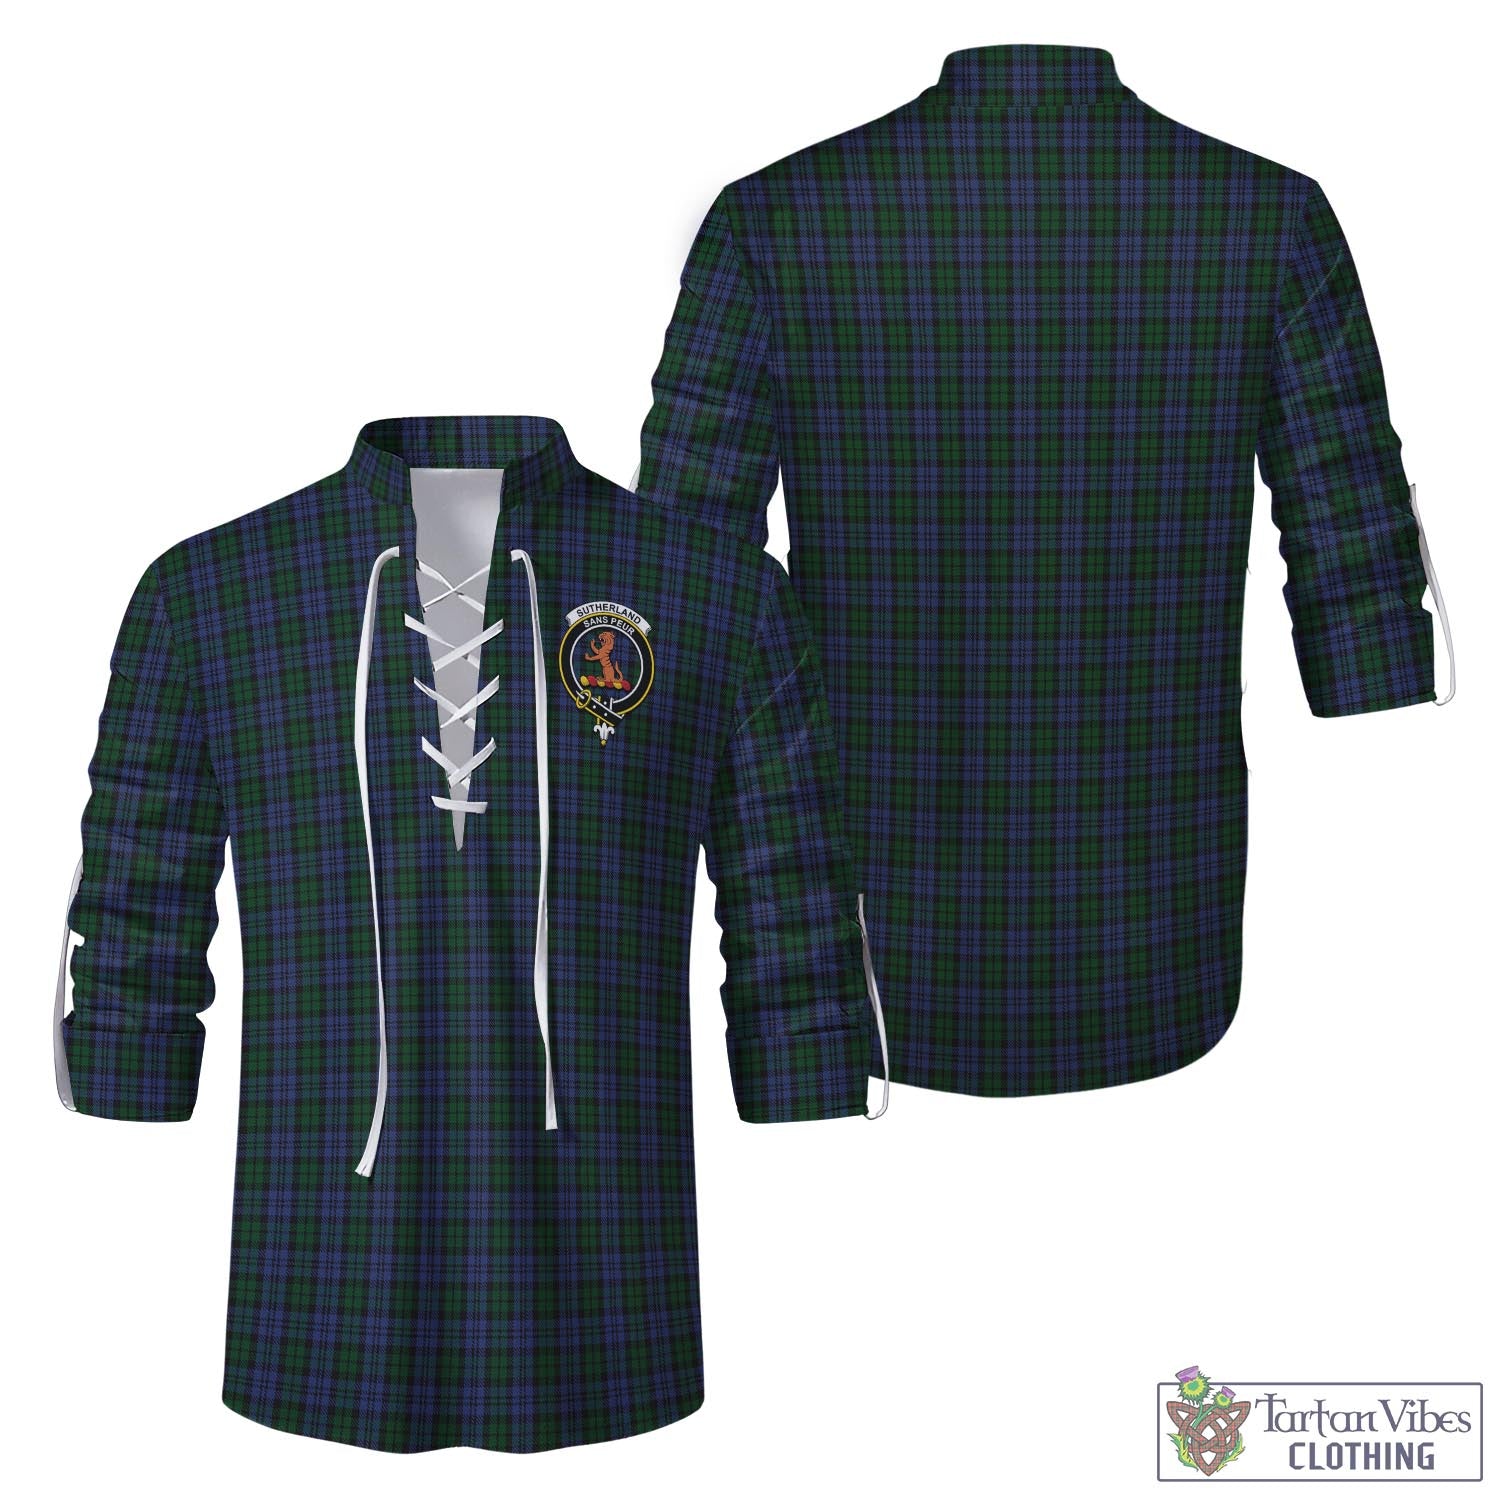 Tartan Vibes Clothing Sutherland Tartan Men's Scottish Traditional Jacobite Ghillie Kilt Shirt with Family Crest